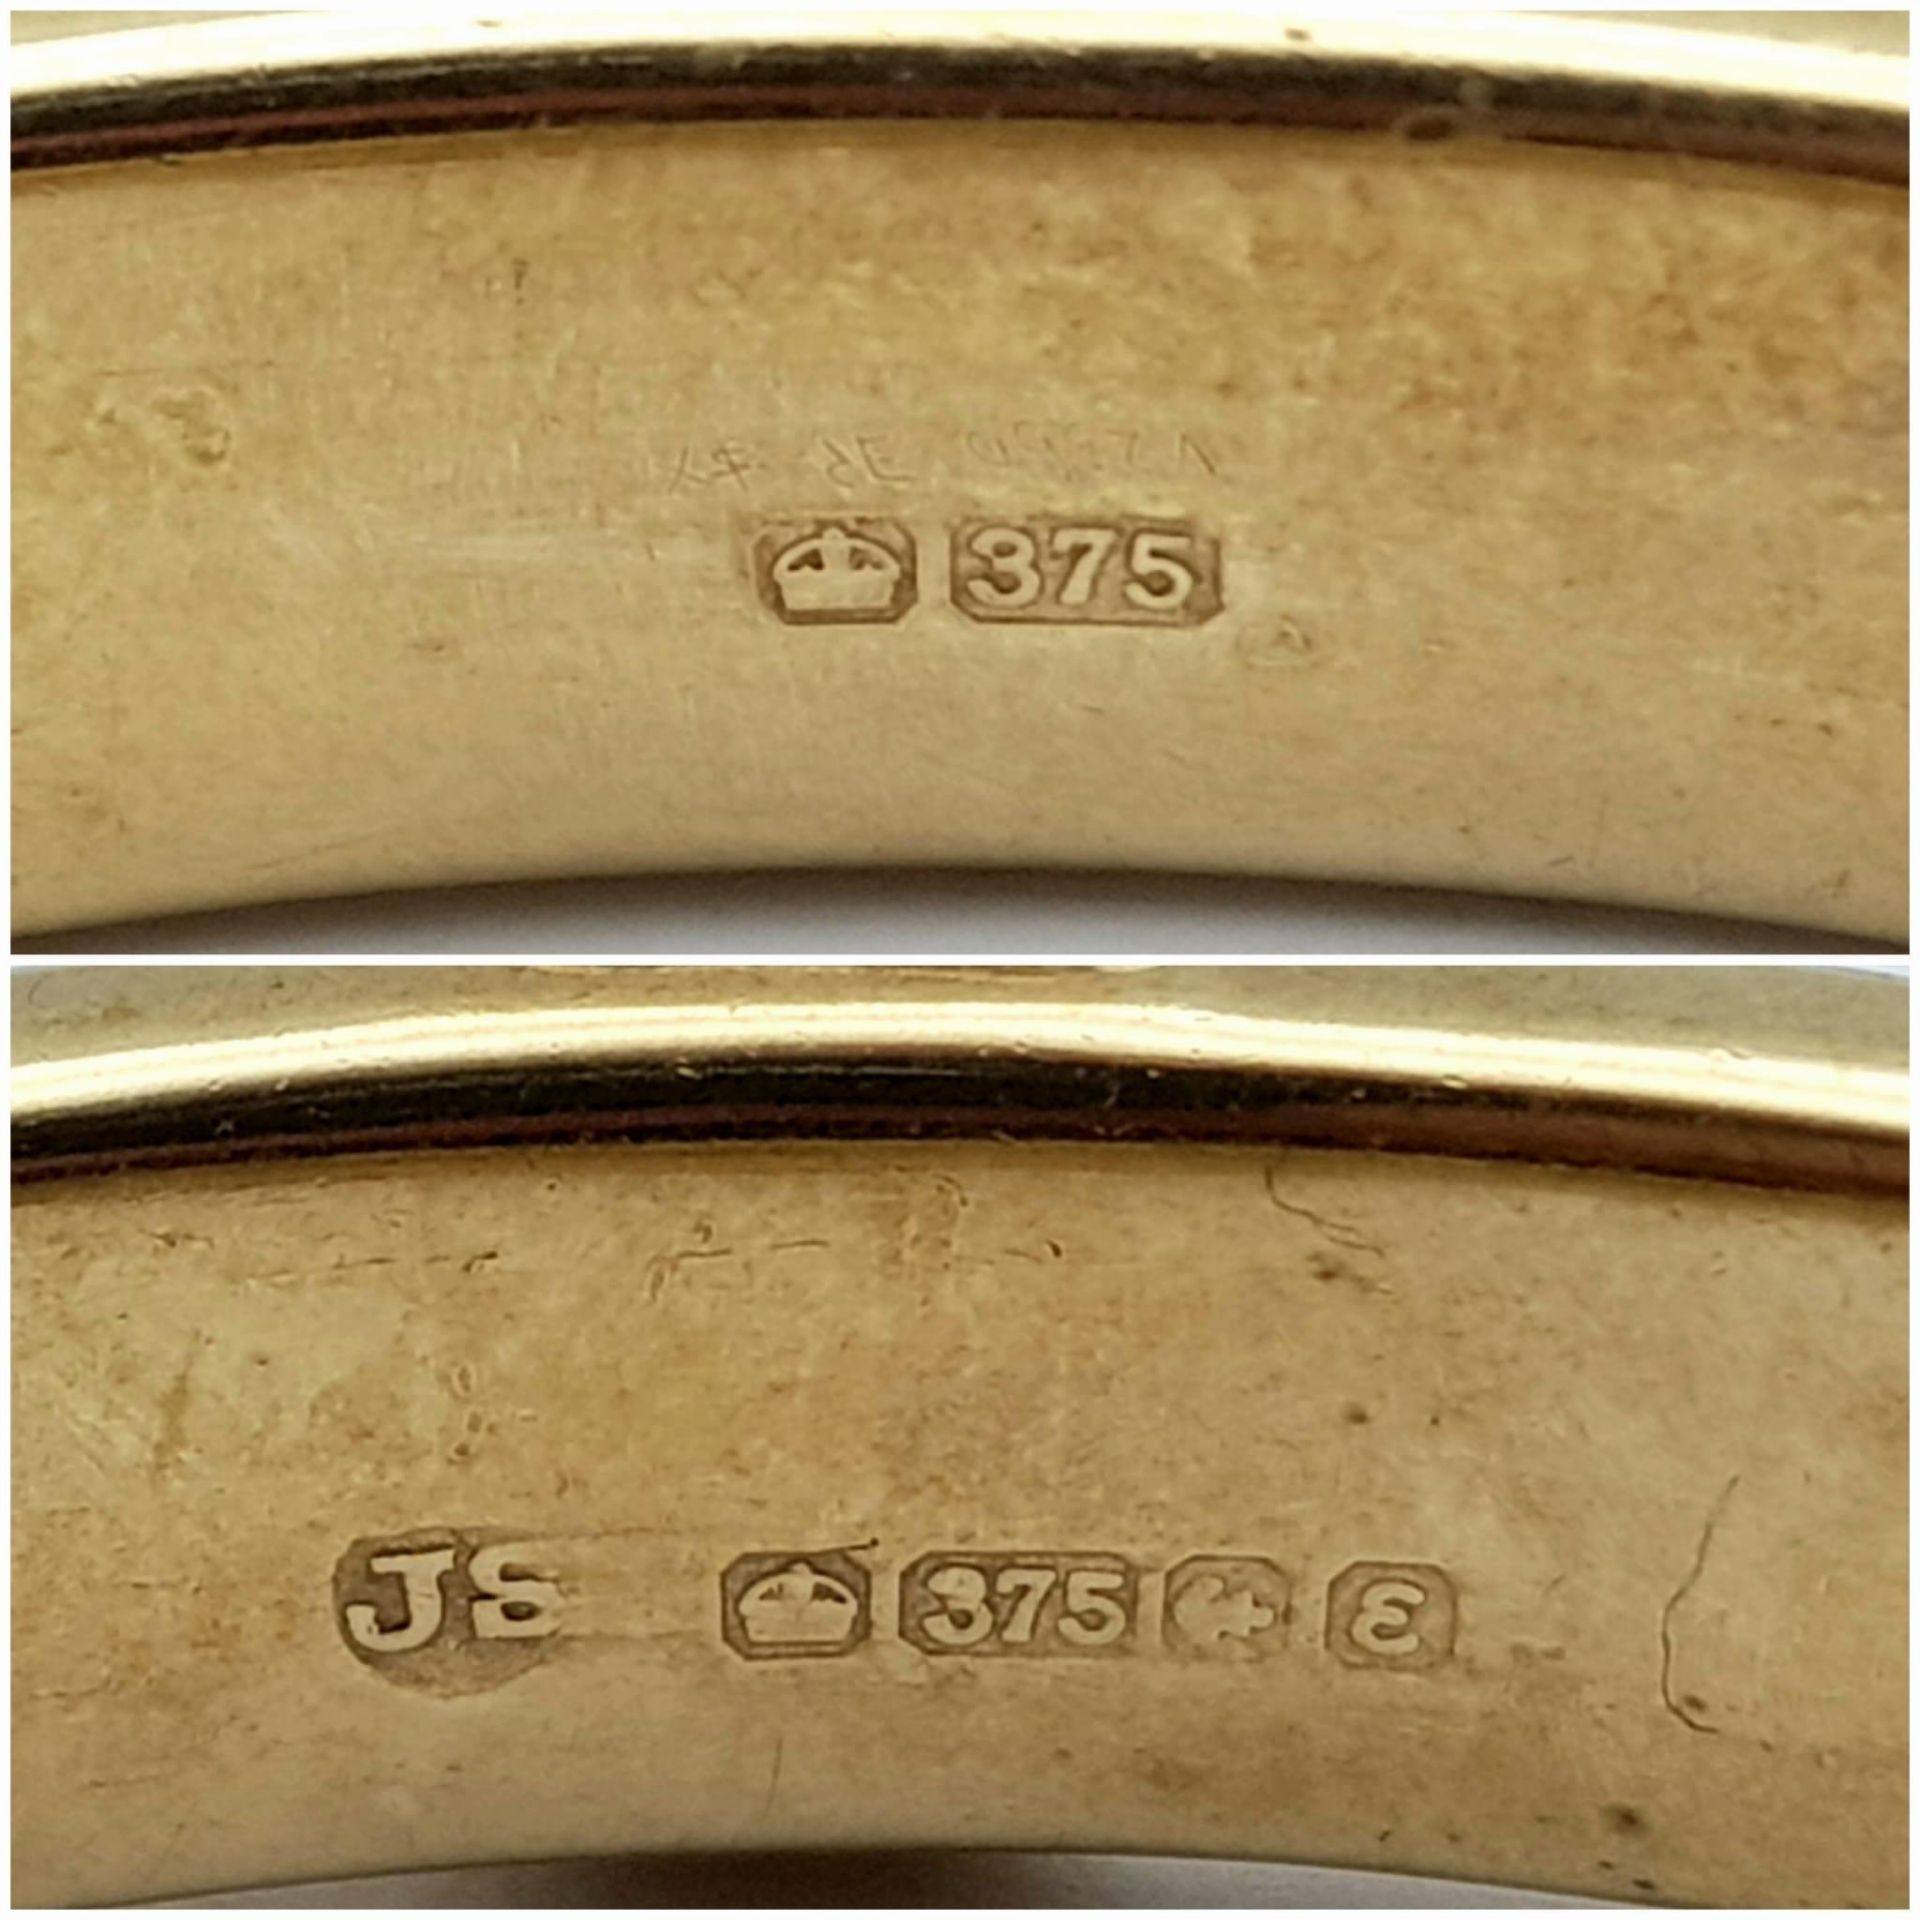 A Vintage 9K Yellow Gold Bangle. Belt buckle design. Clip open function. 6cm inner diameter. 15.7g - Image 6 of 6